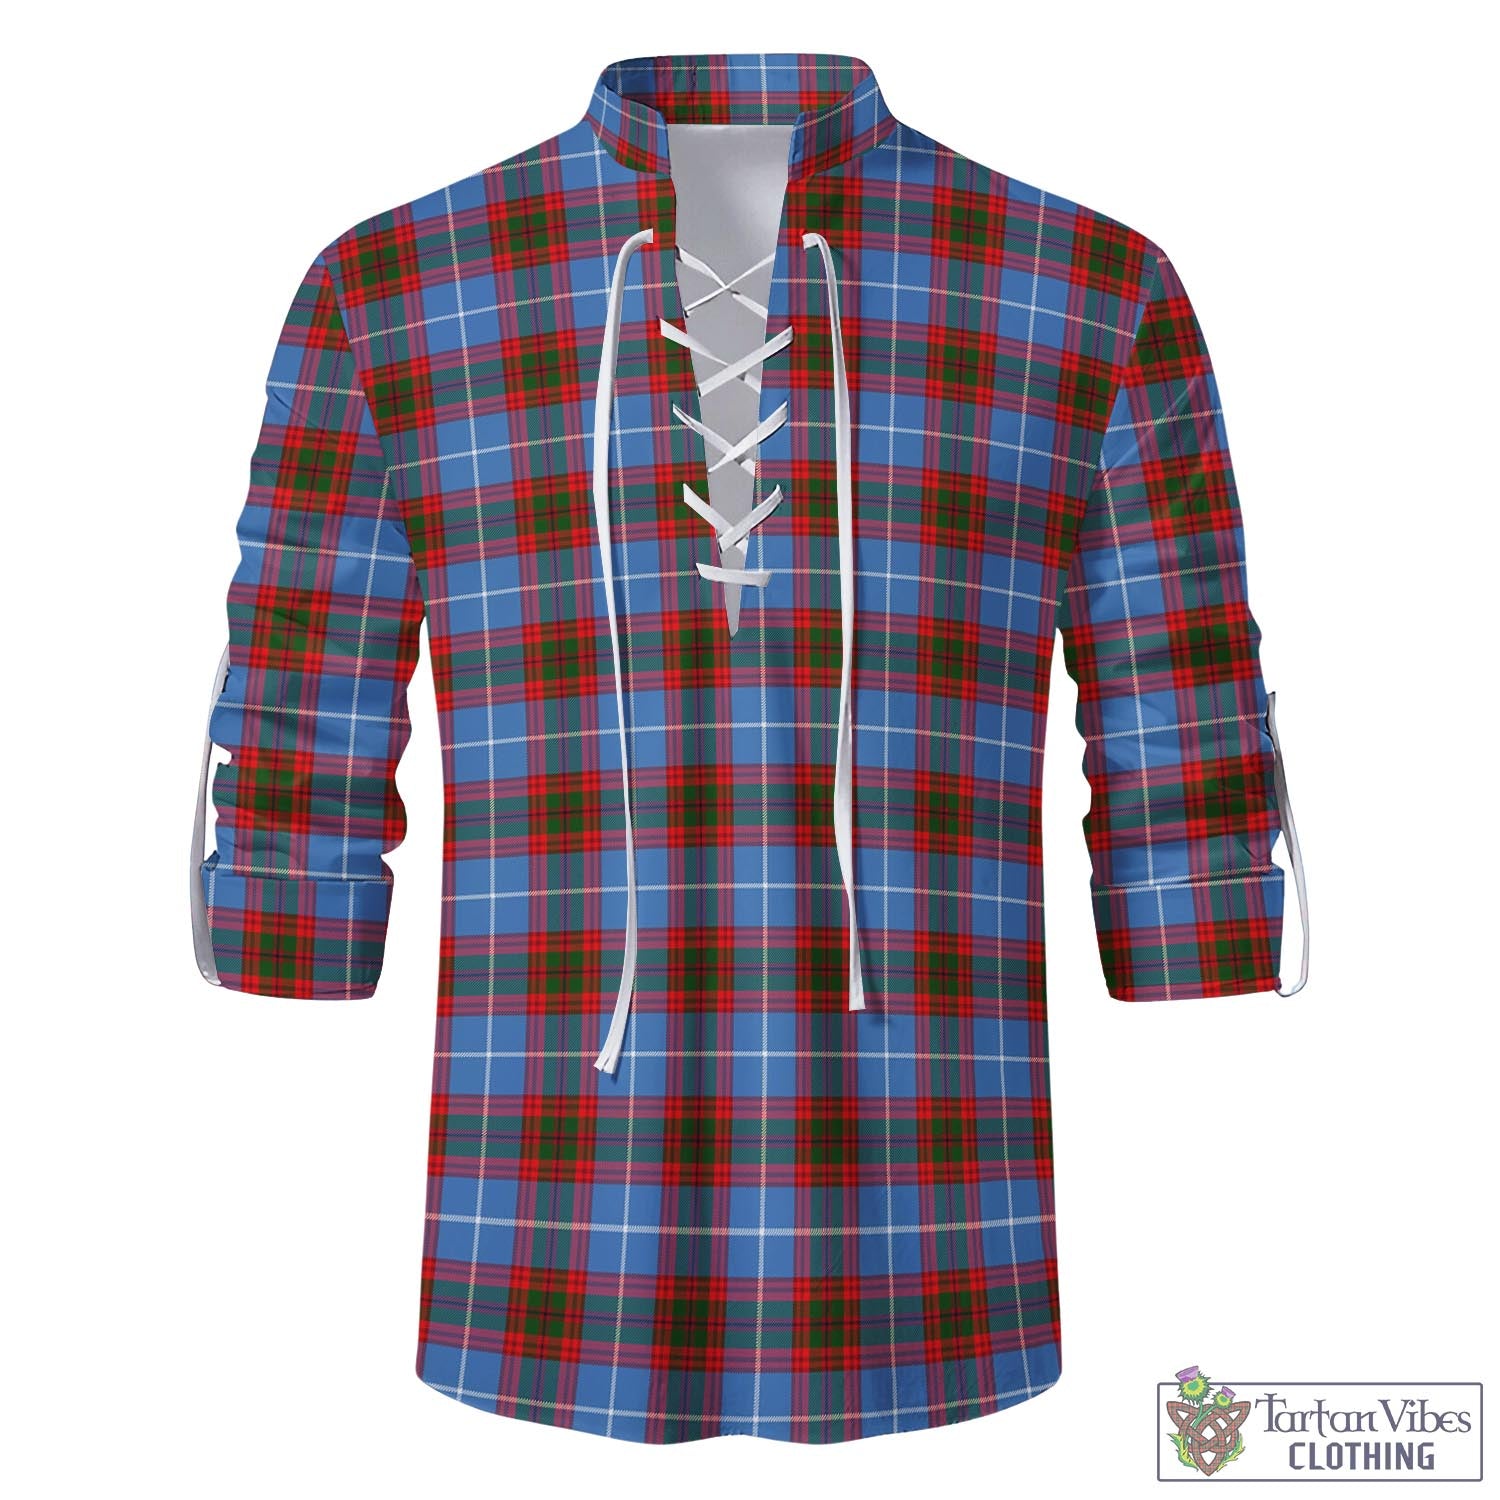 Tartan Vibes Clothing Dalmahoy Tartan Men's Scottish Traditional Jacobite Ghillie Kilt Shirt